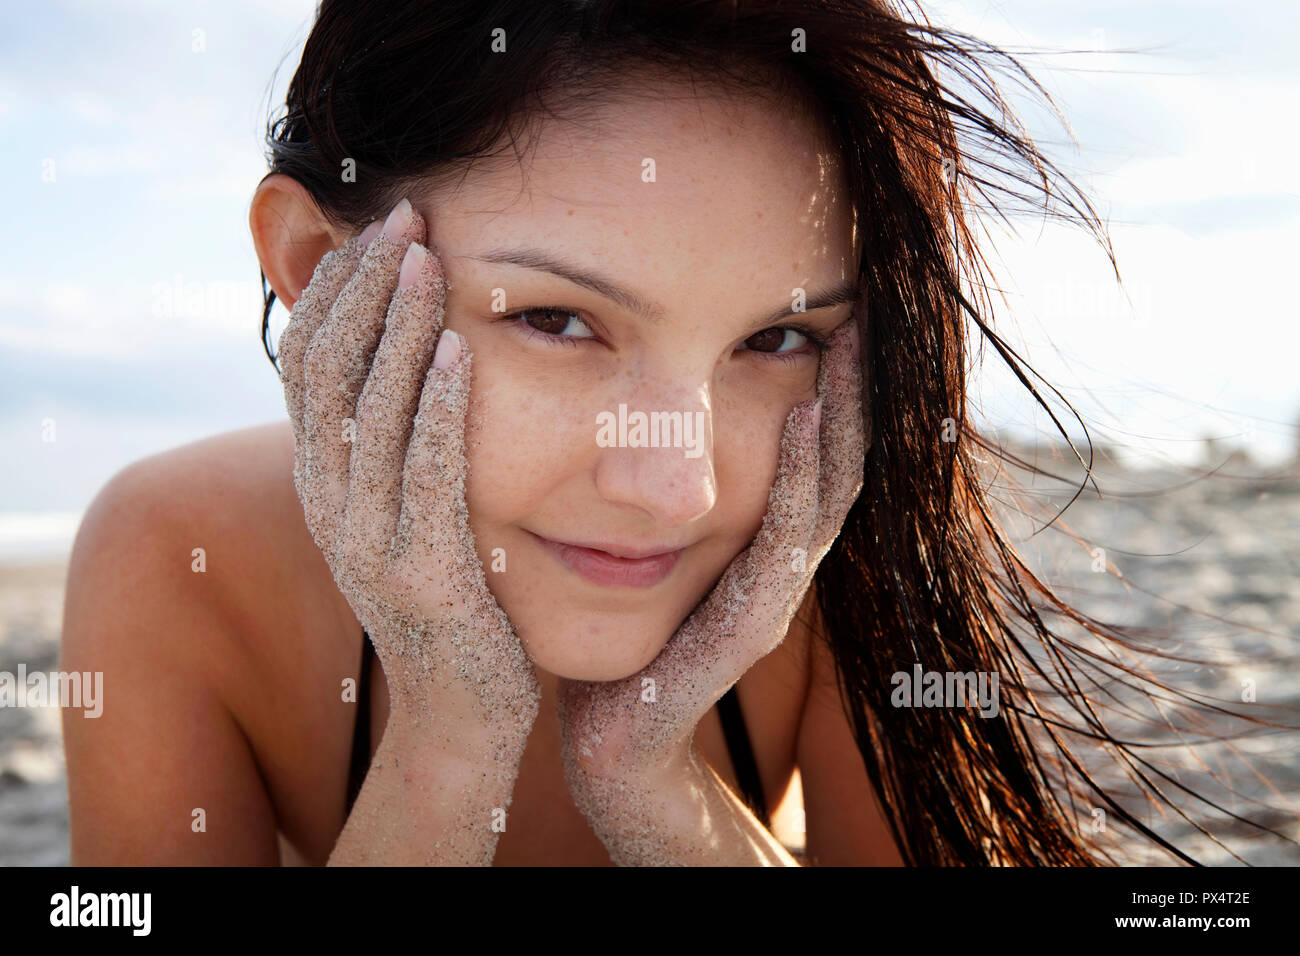 Woman on beach. Stock Photo